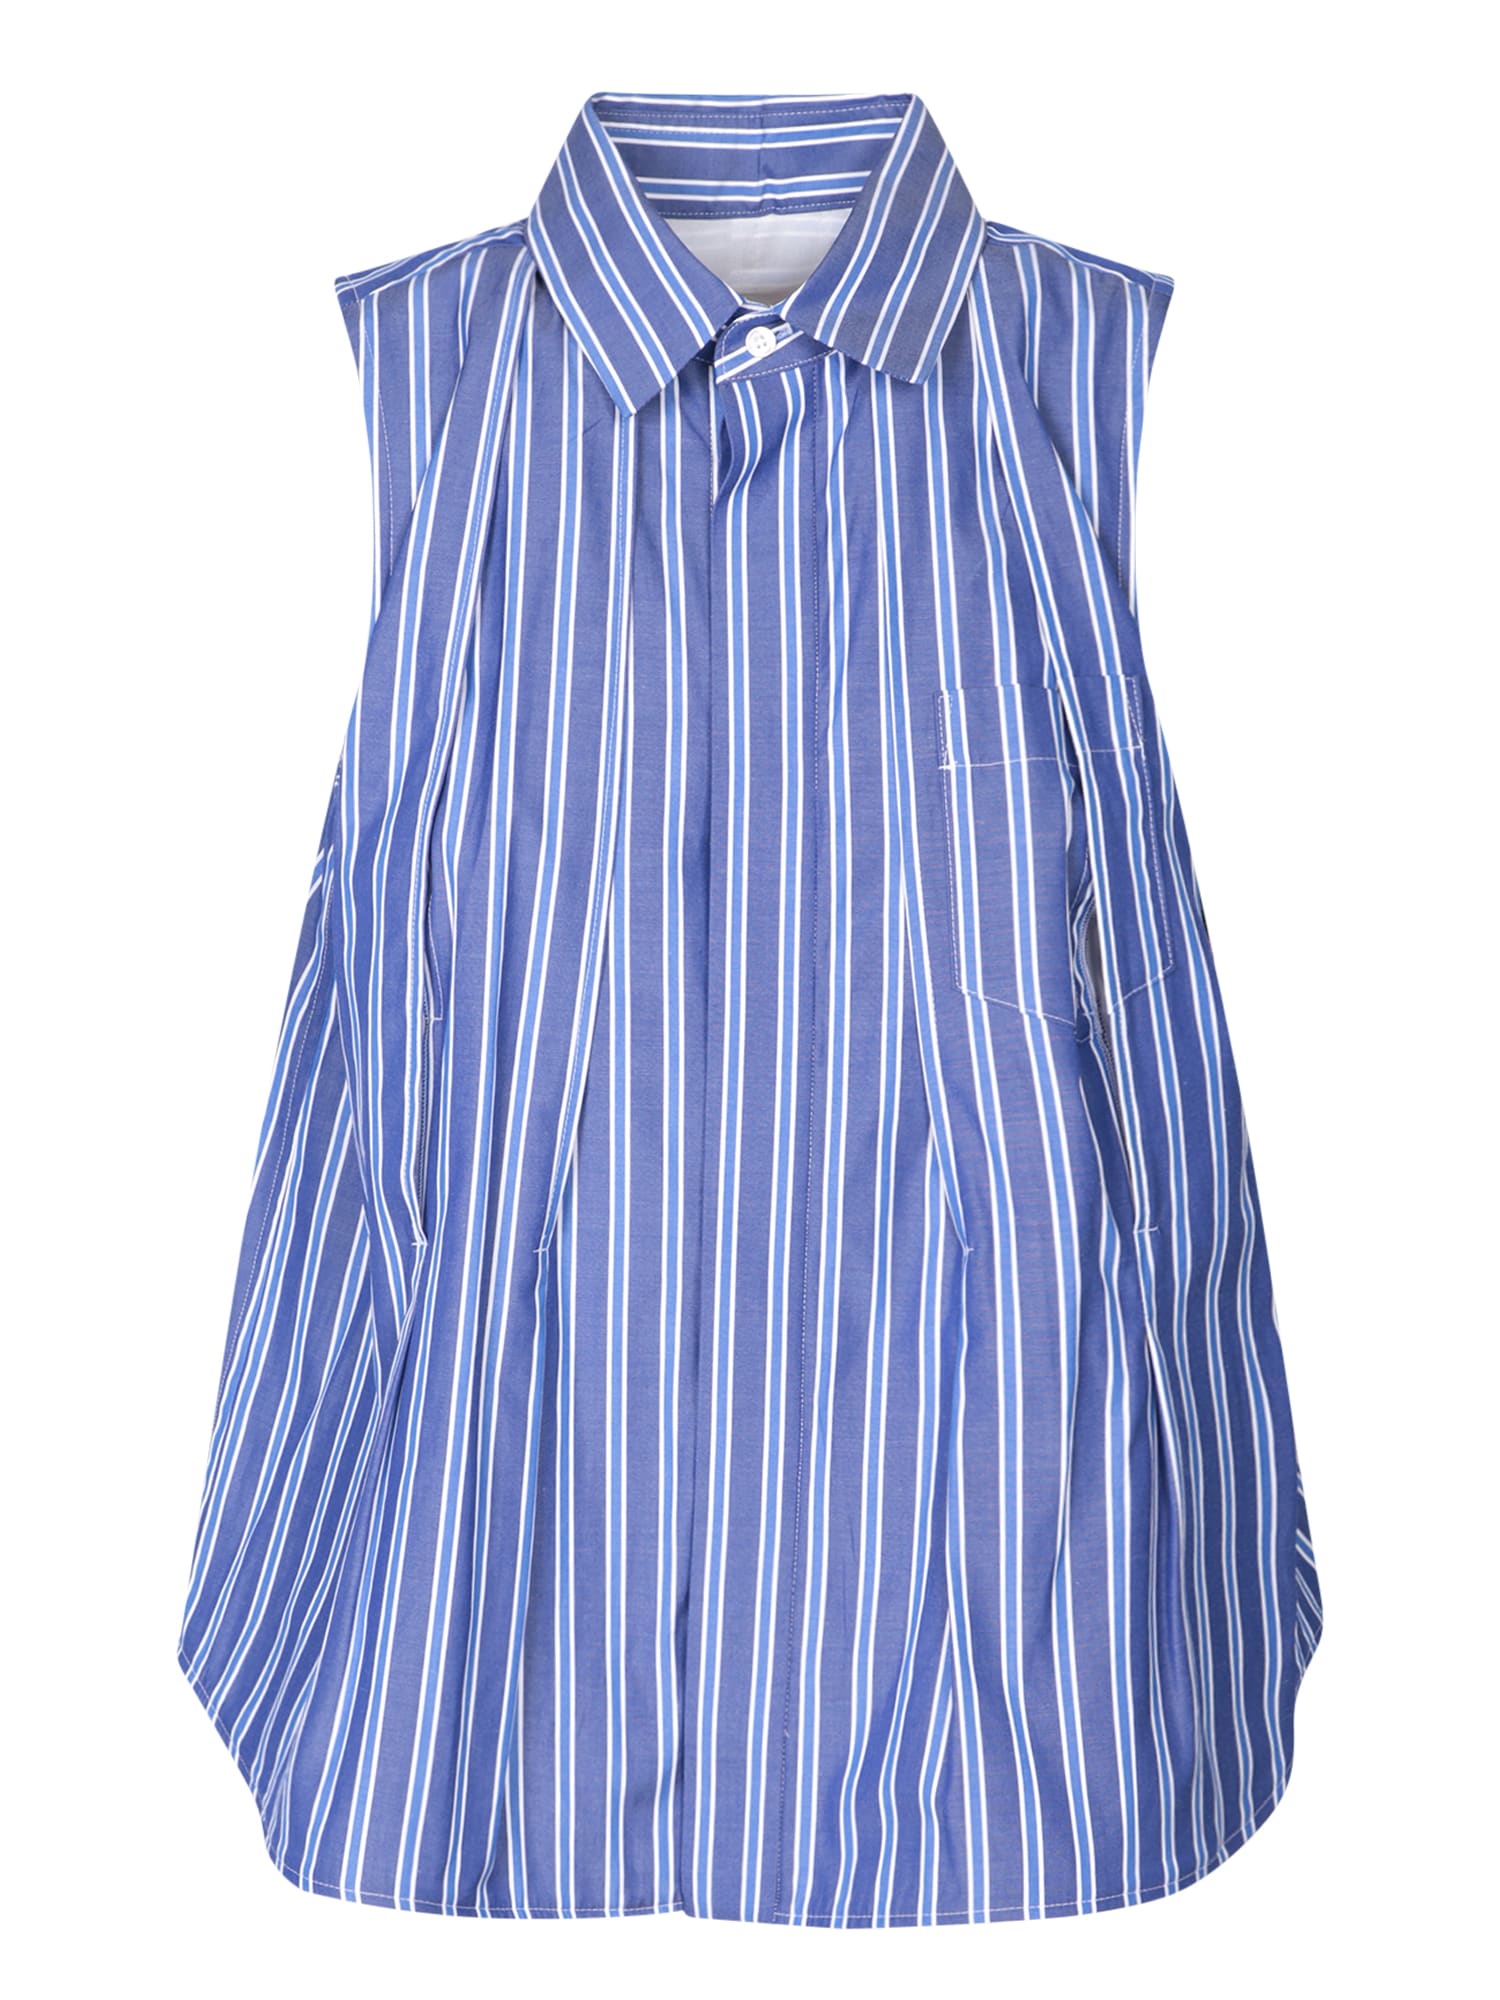 Sleeveless Shirt In White And Light Blue Stripes